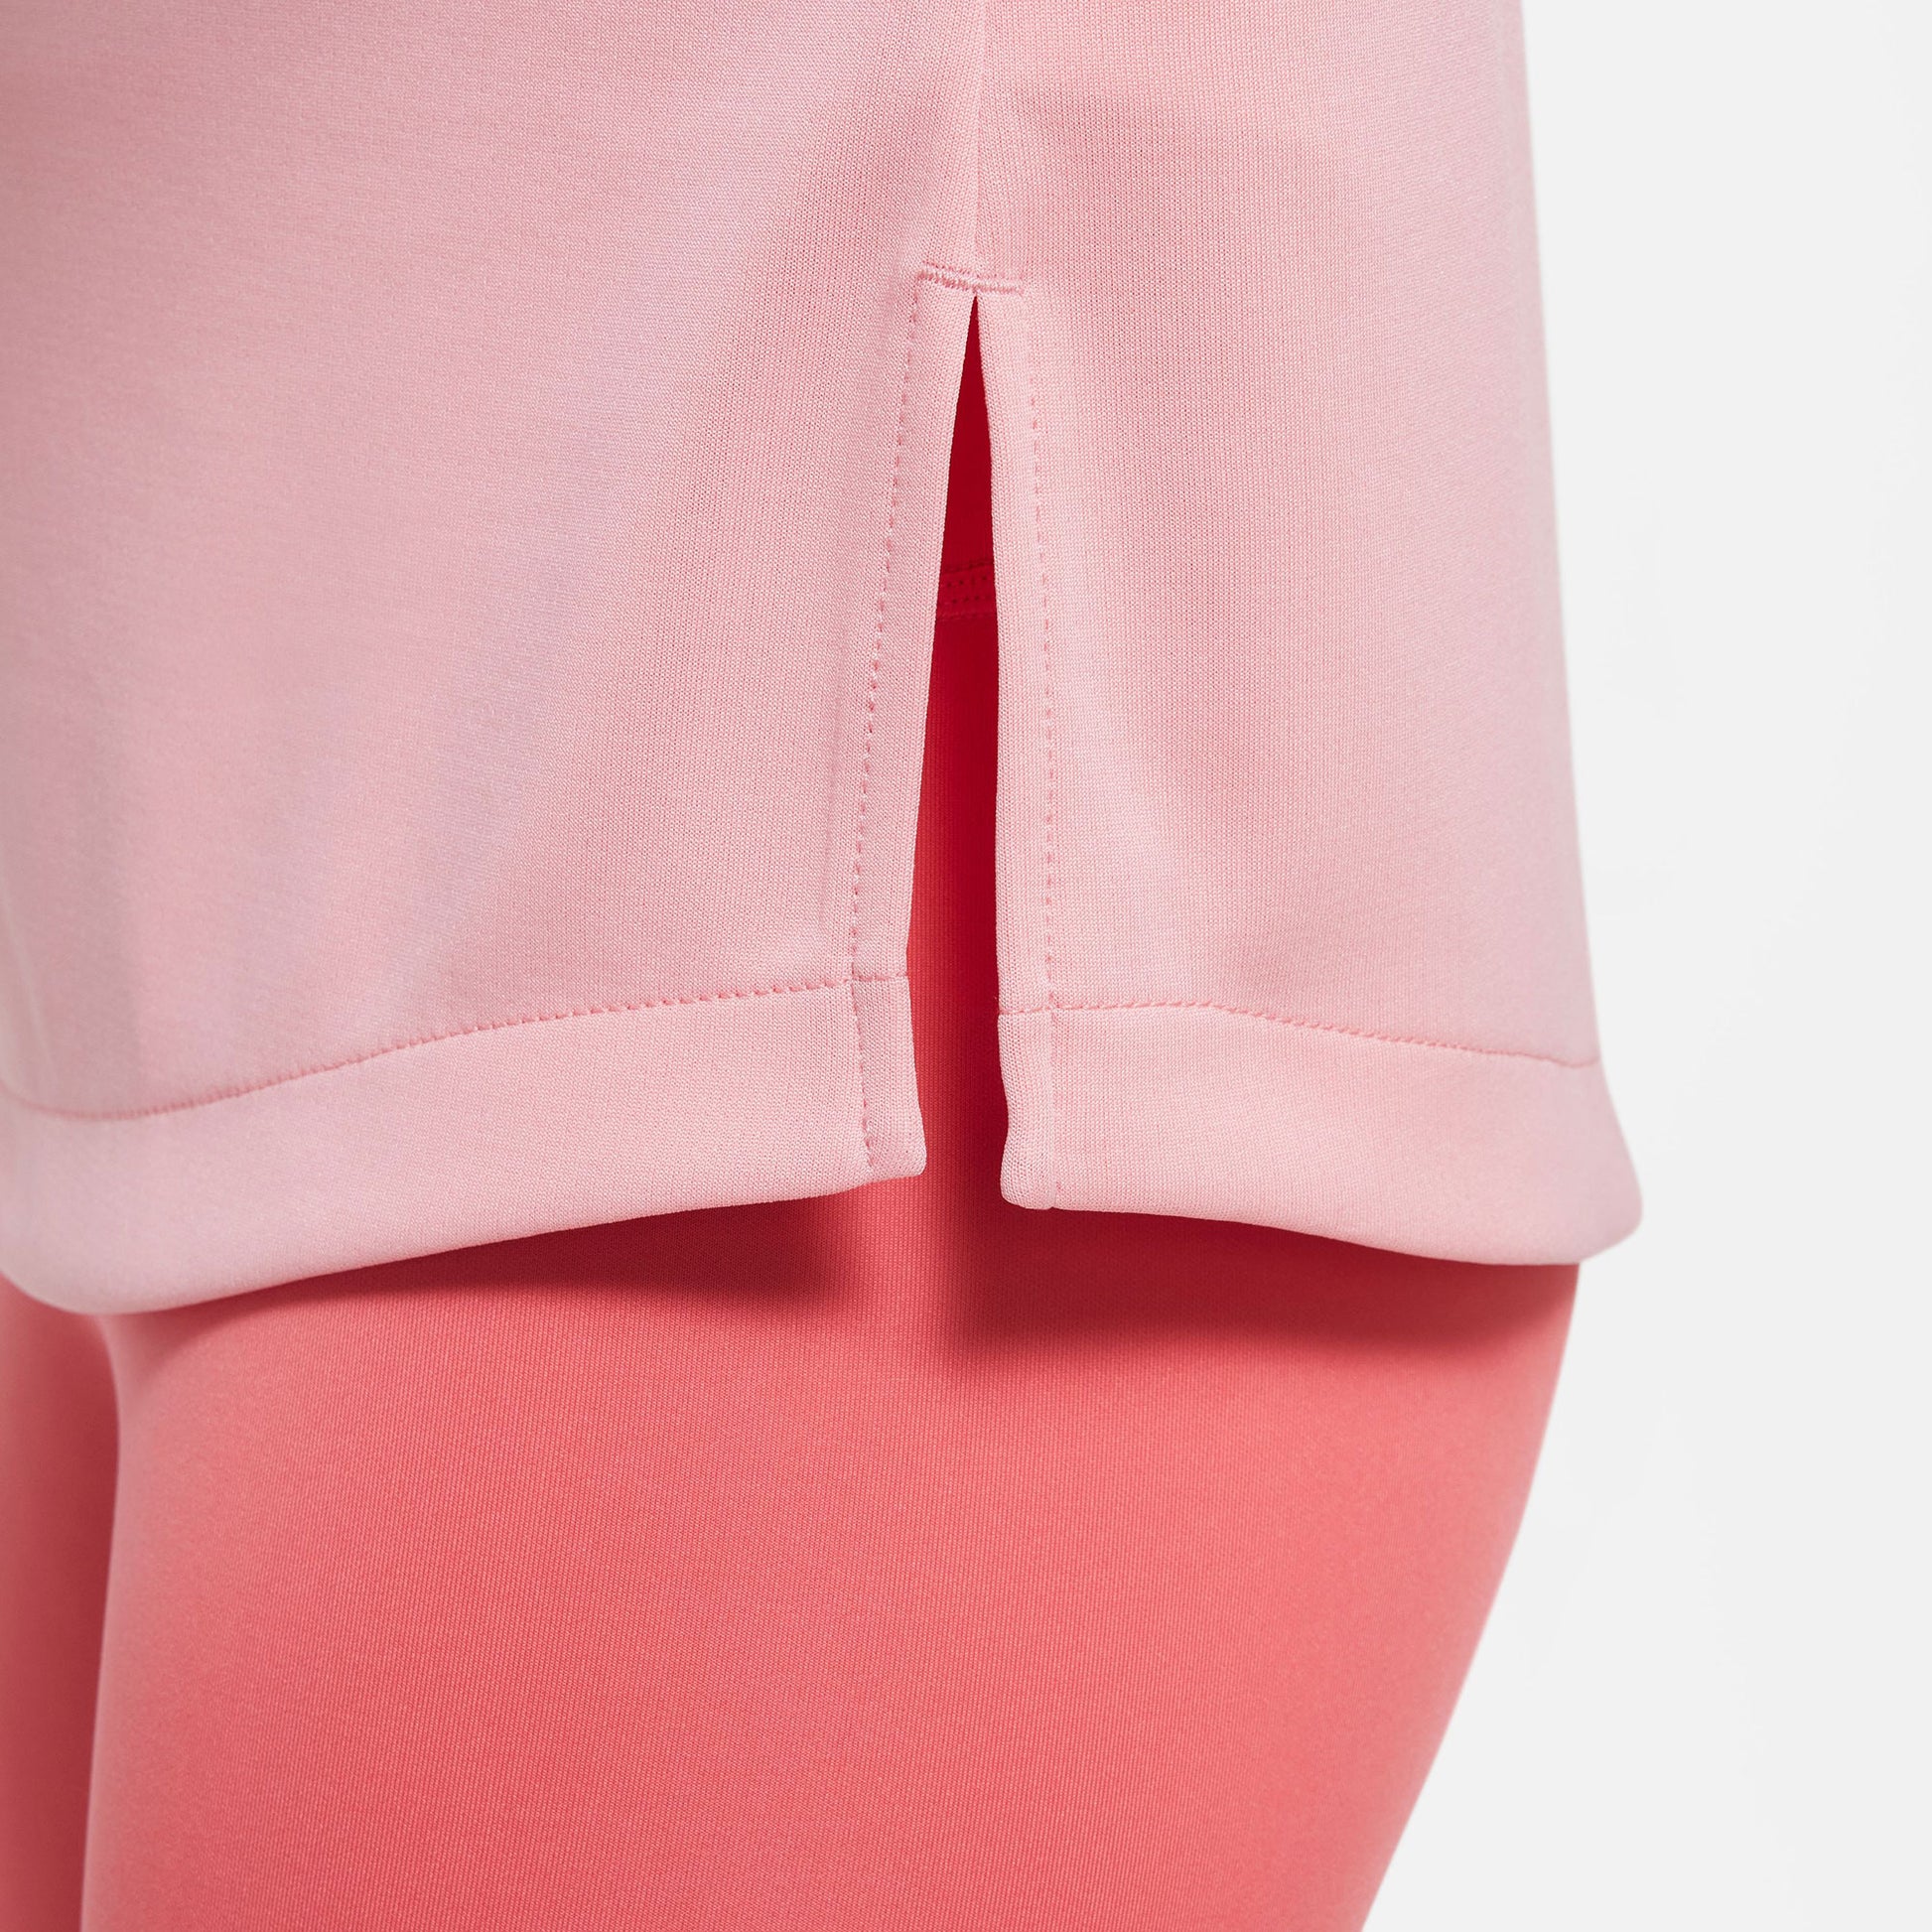 Nike Dri-FIT Girls' Long-Sleeve Top Pink (5)